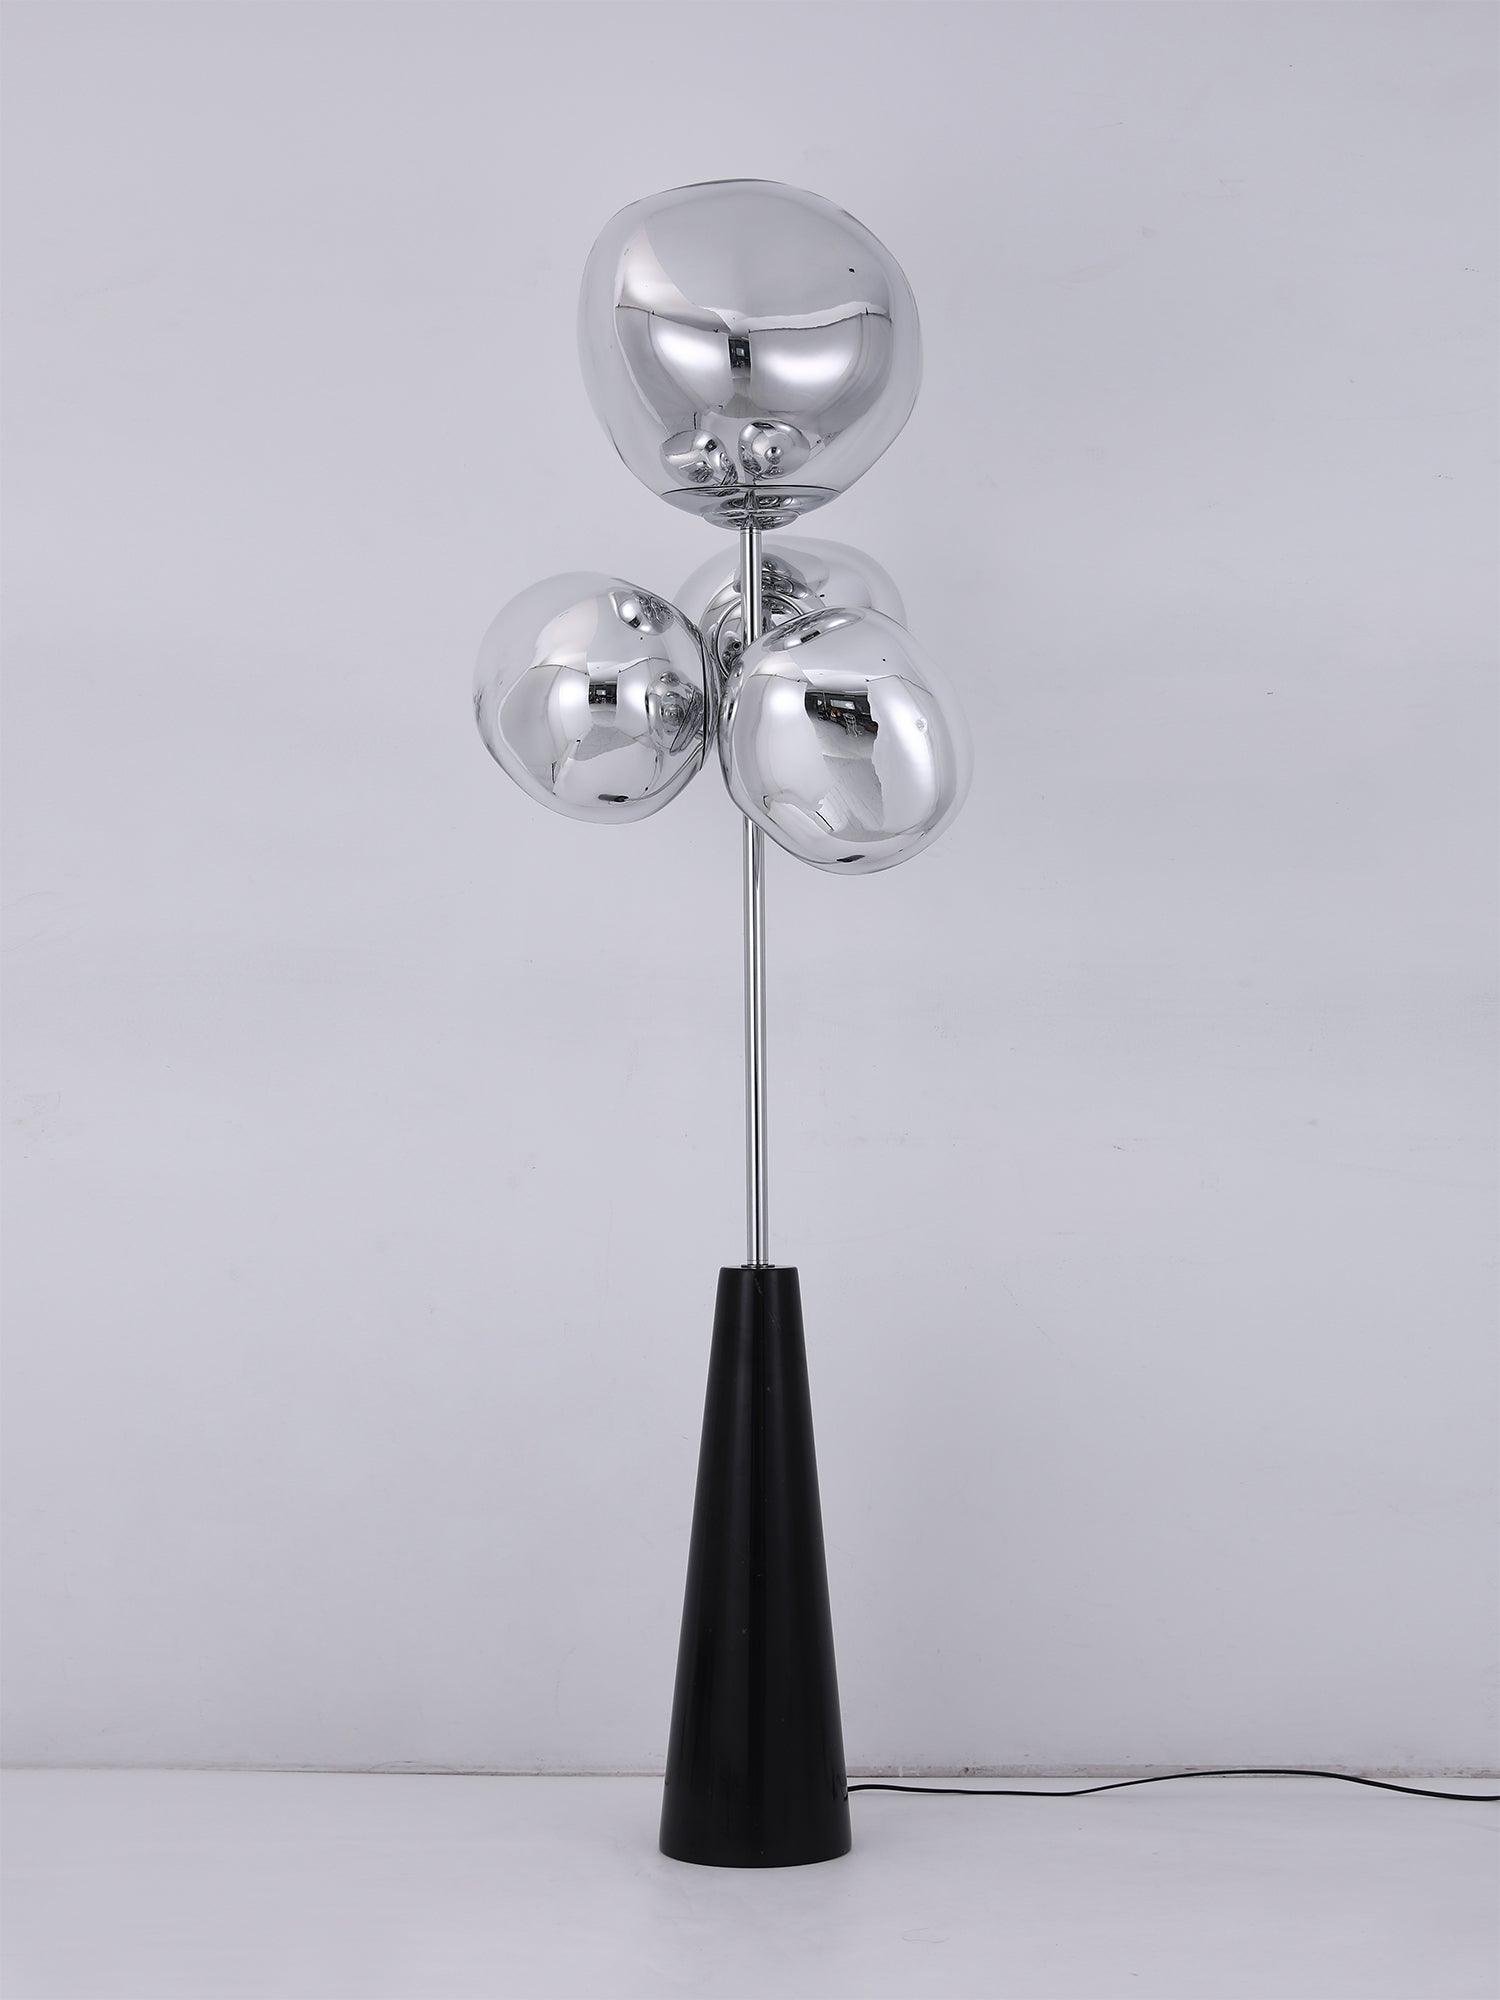 Floor Lamp - Melt Column, 22.8" Diameter x 68.9" Height (58cm x 175cm), Chrome and Black Finish, UK Plug